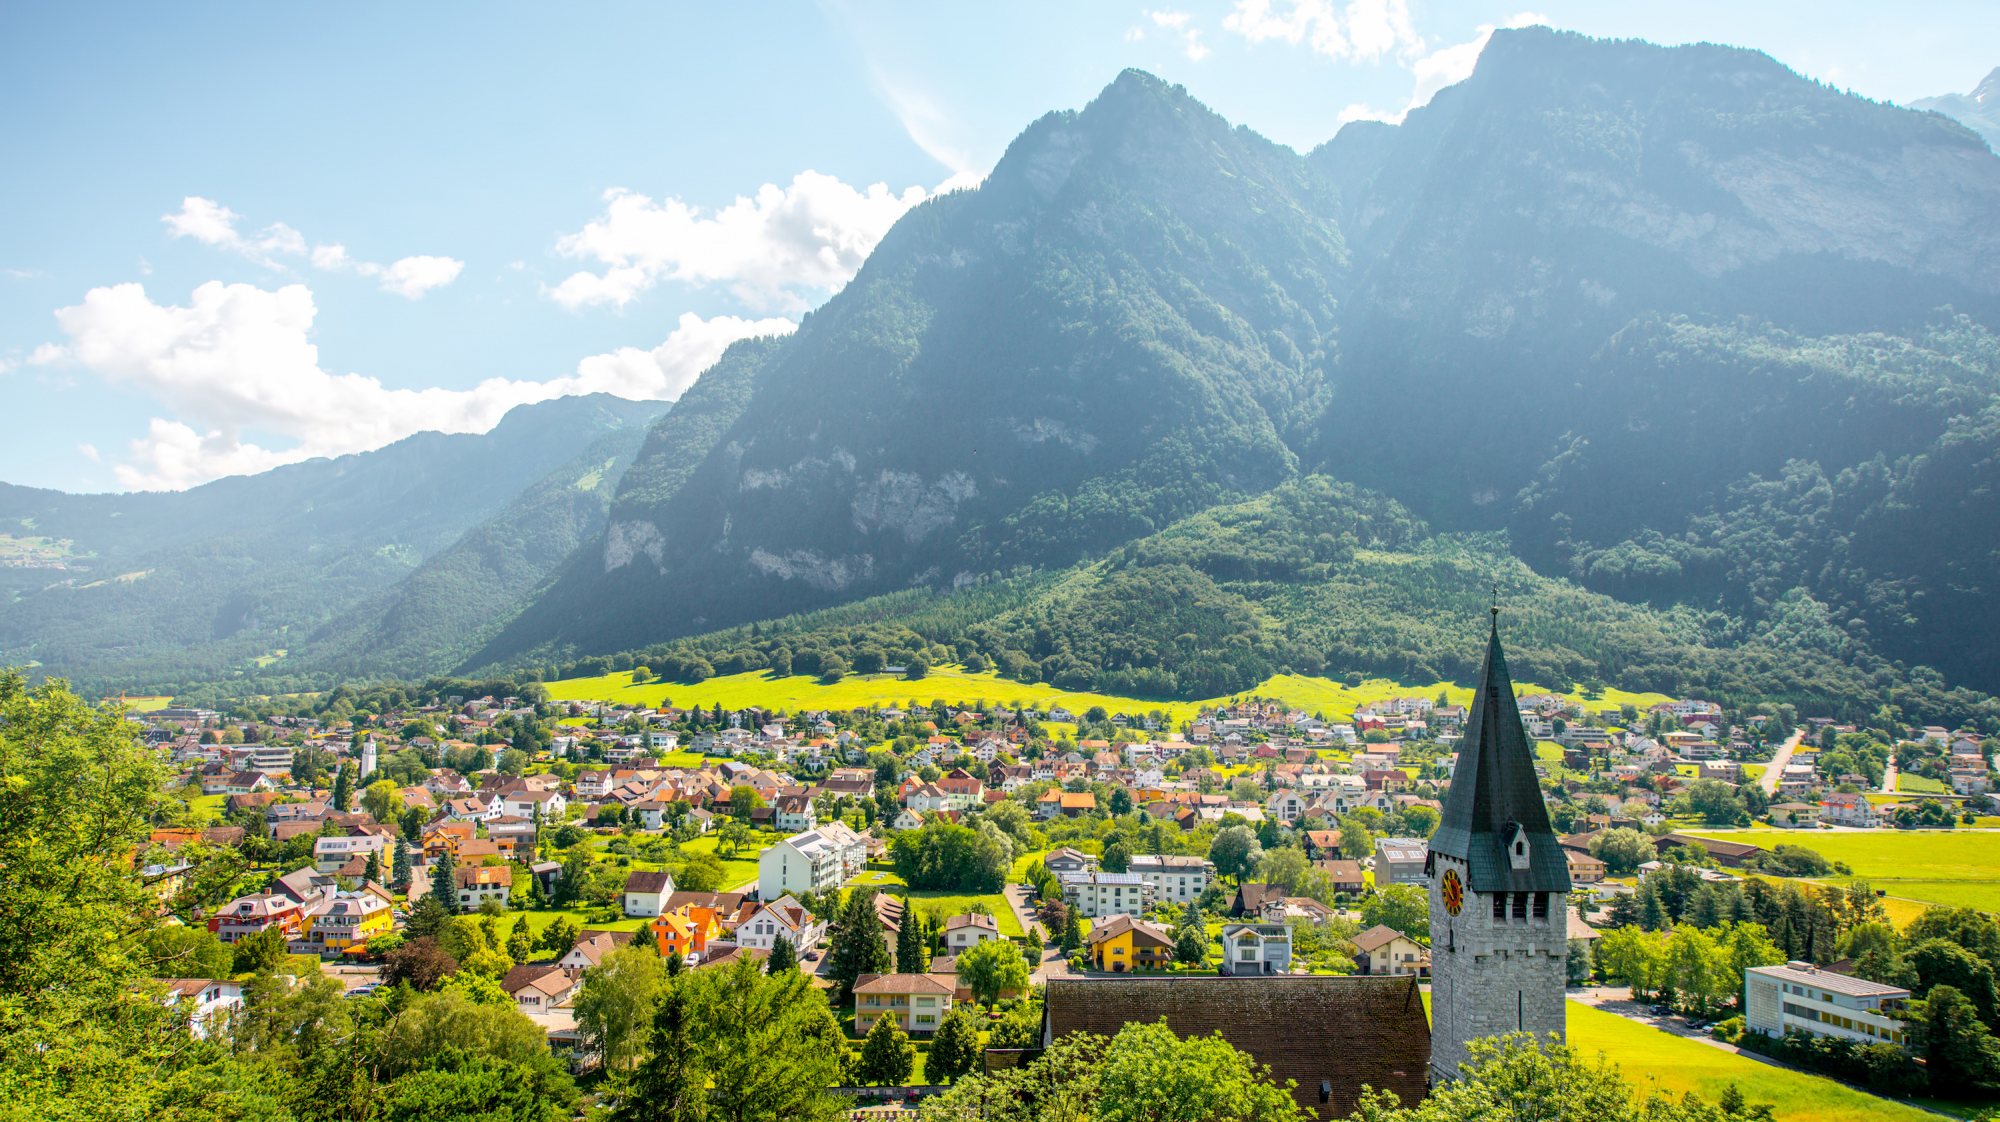 Caso seja aprovado, o Liechtenstein será o 191º país a aderir ao FMI